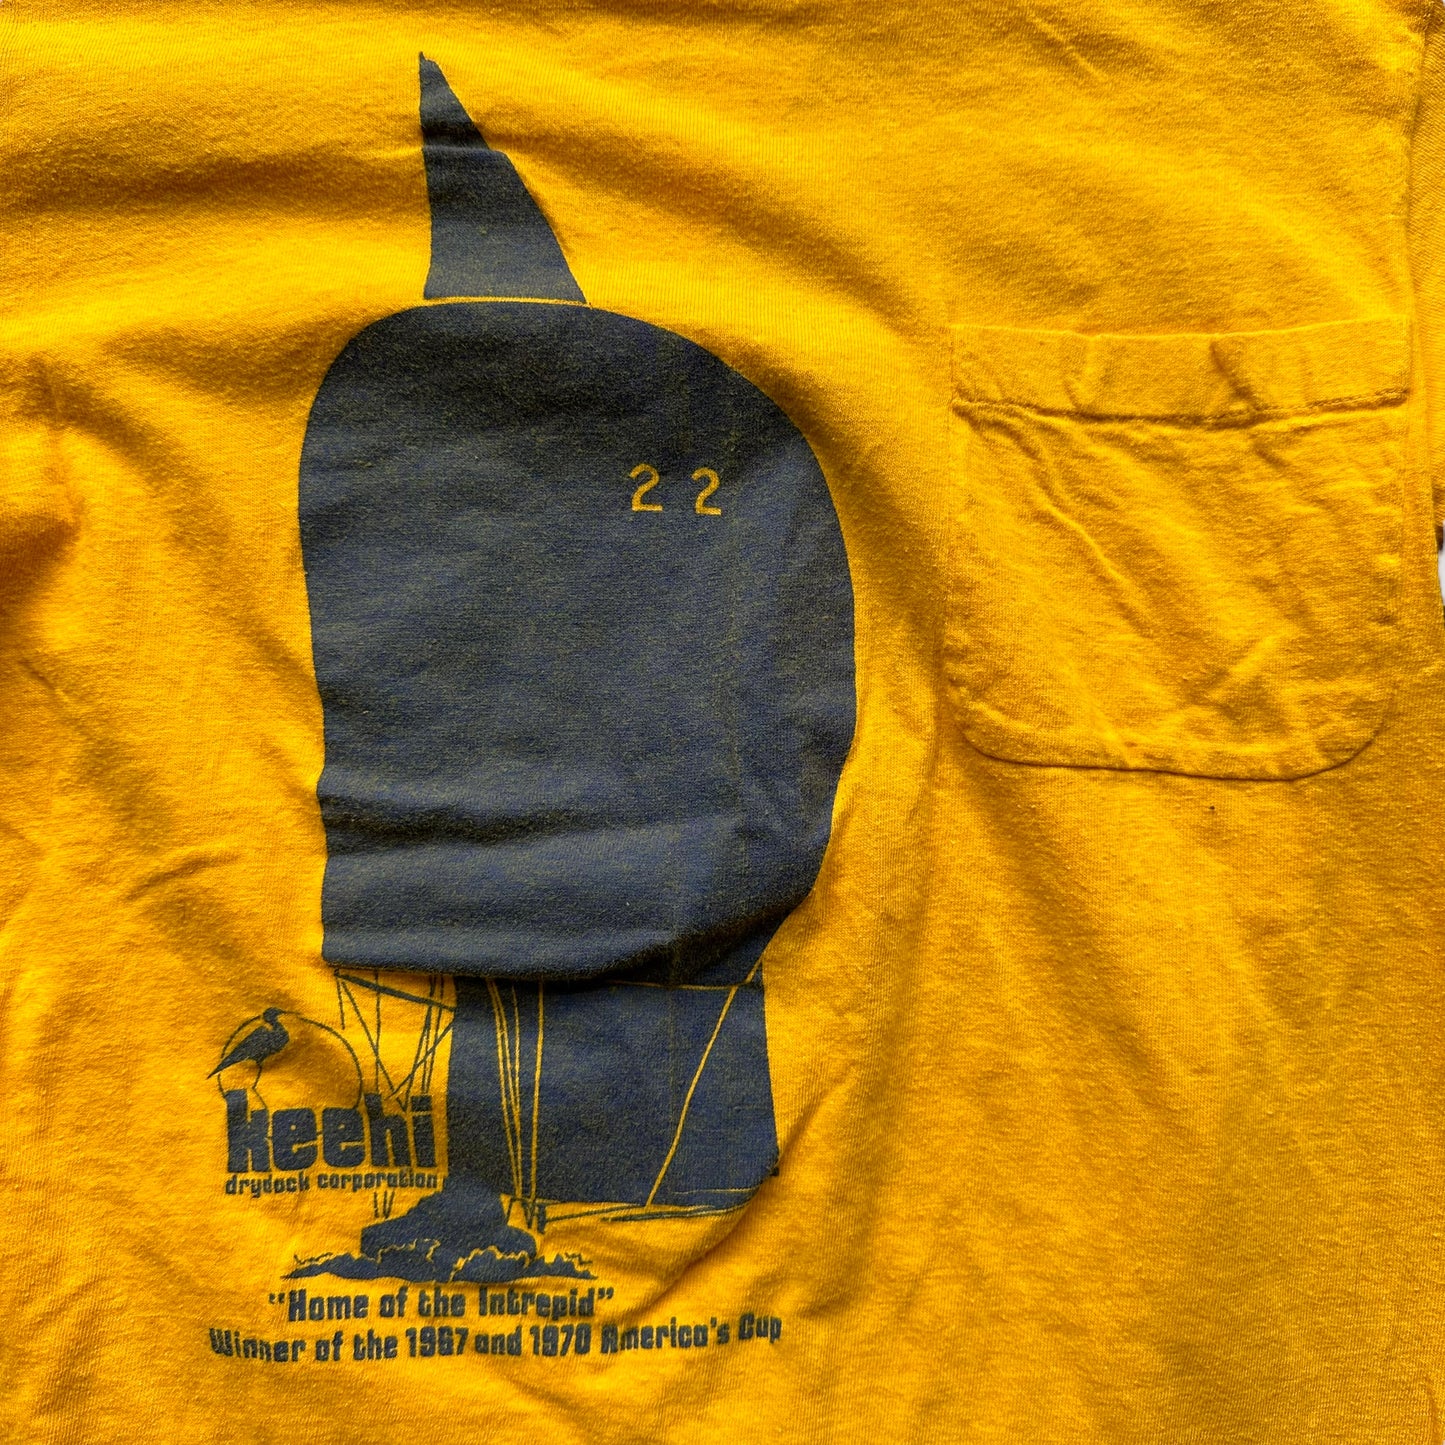 Front Graphic on Vintage Keehi Drydock Corporation Pocket Tee SZ M | Vintage Sailing T-Shirts Seattle | Barn Owl Vintage Tees Seattle